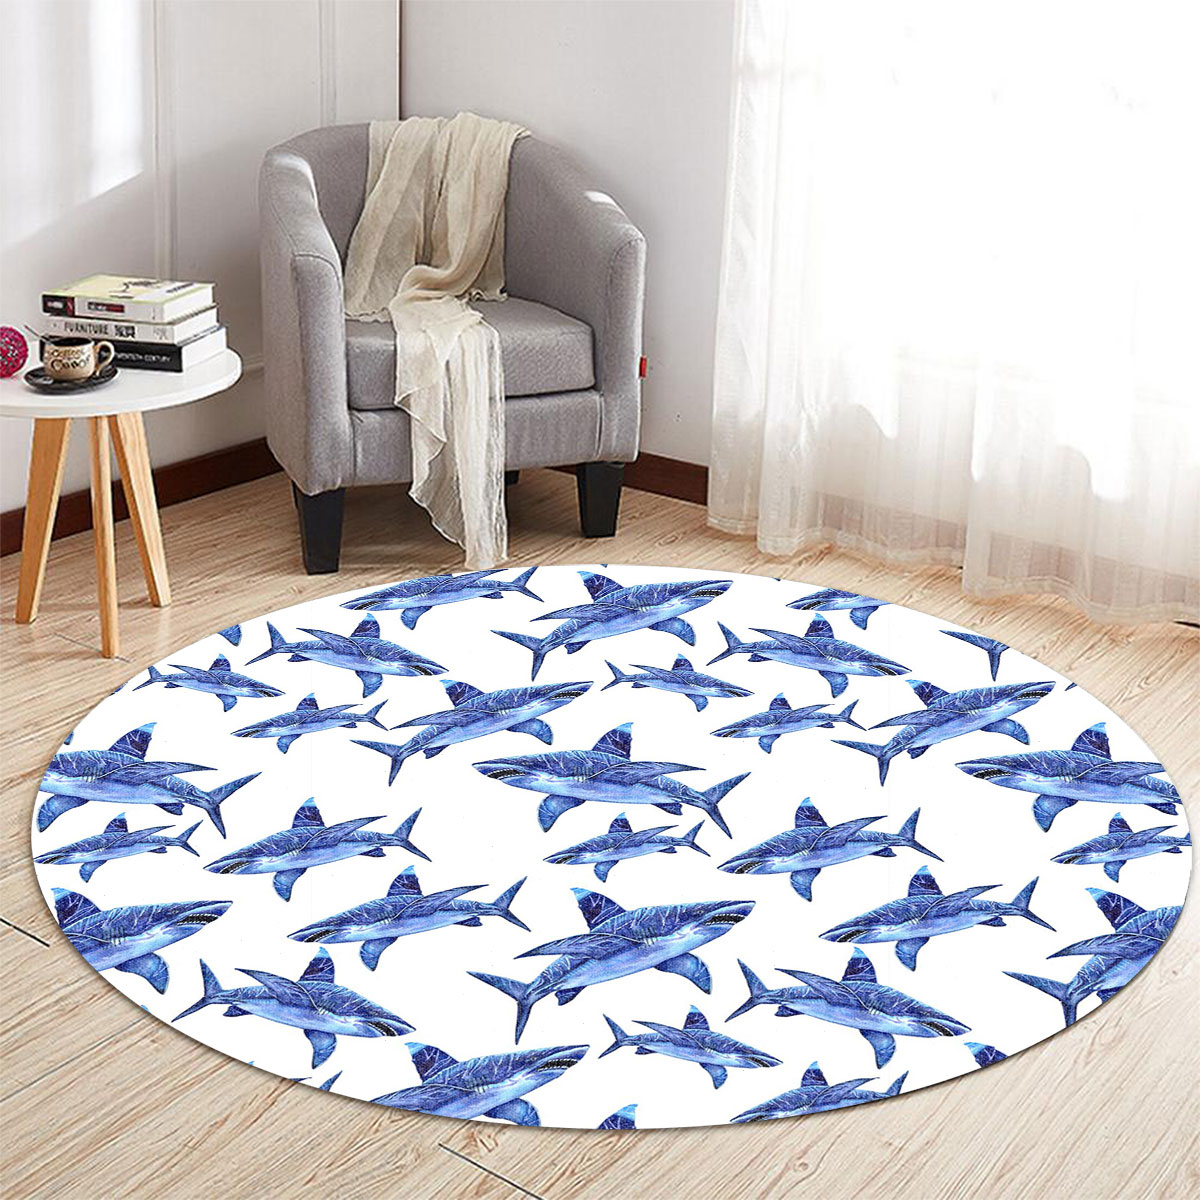 Great White Shark On White Round Carpet